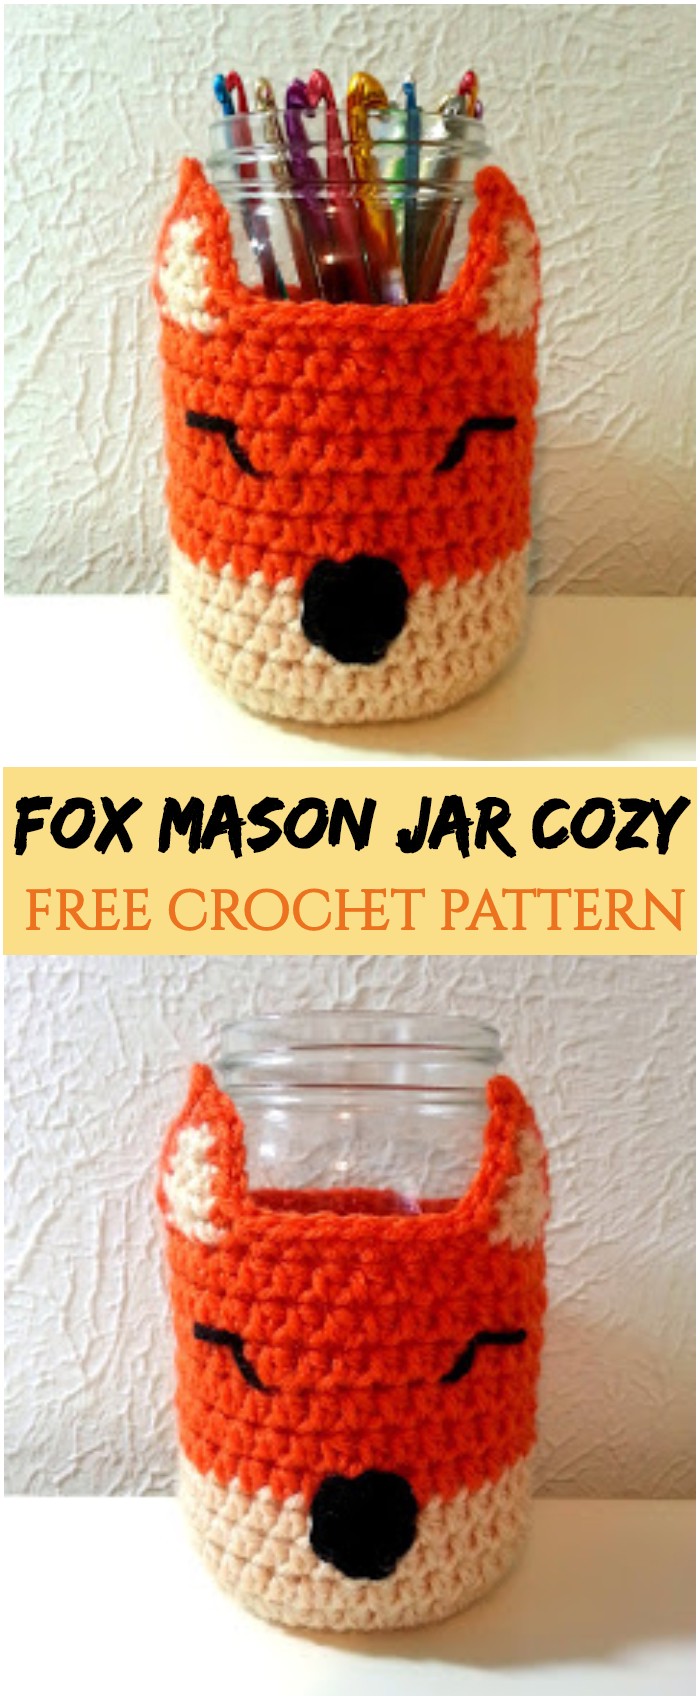 Crochet Fox Mason Jar Cozy